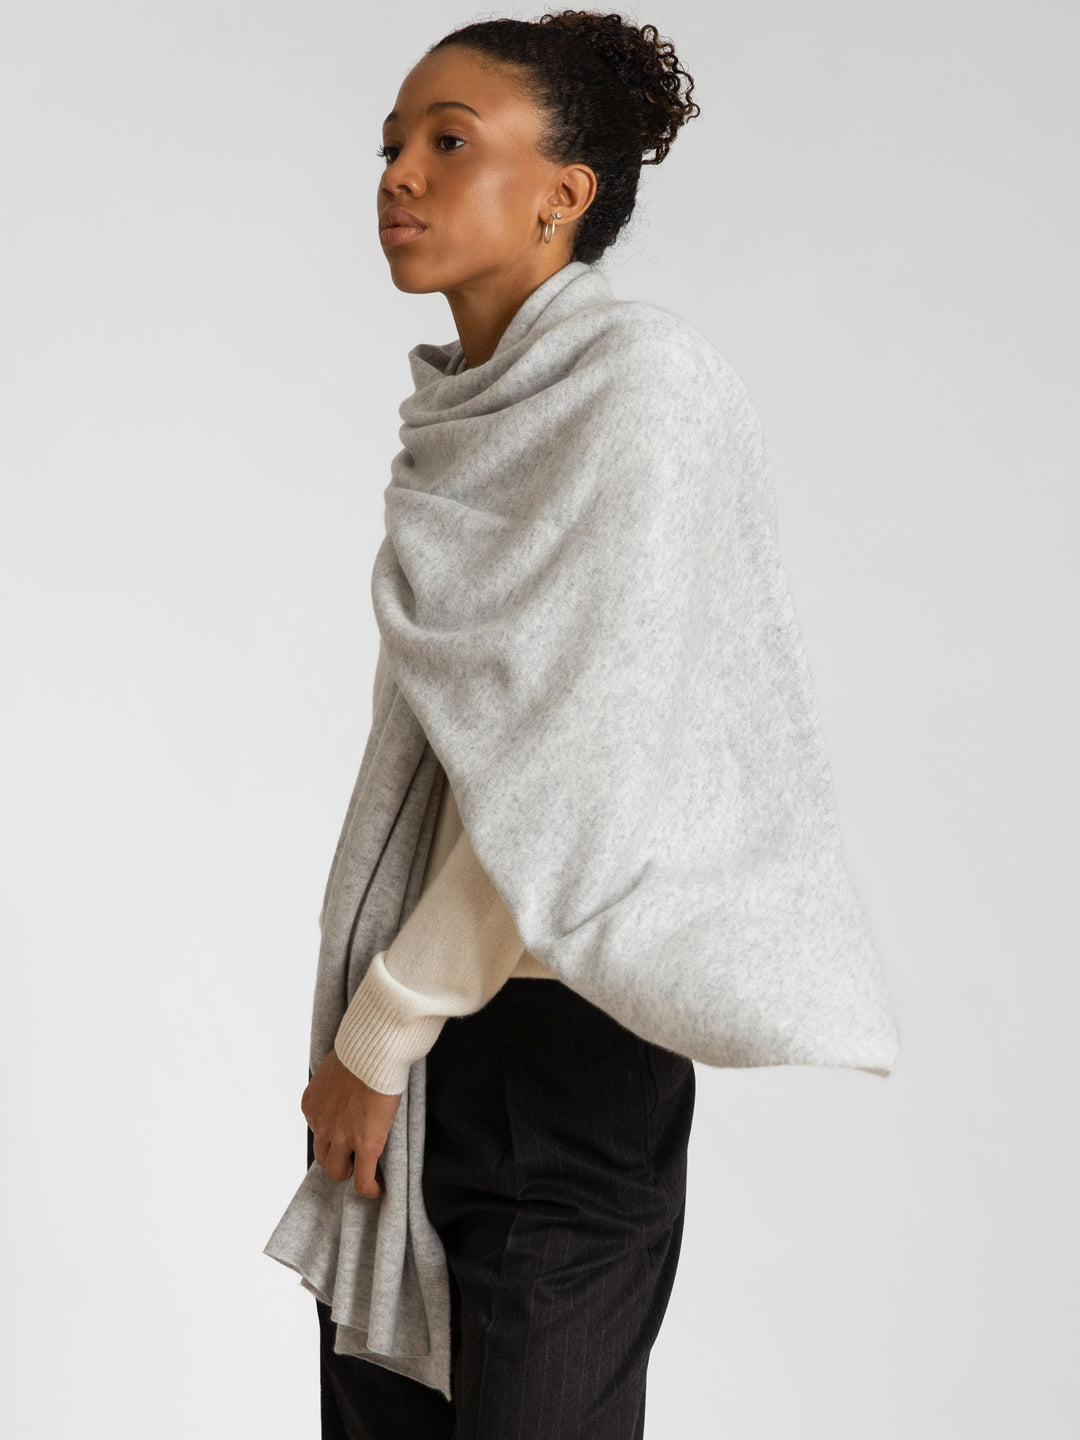 Cashmere scarf "Signature" light grey, in 100% cashmere from Kashmina. Scandinavian design.